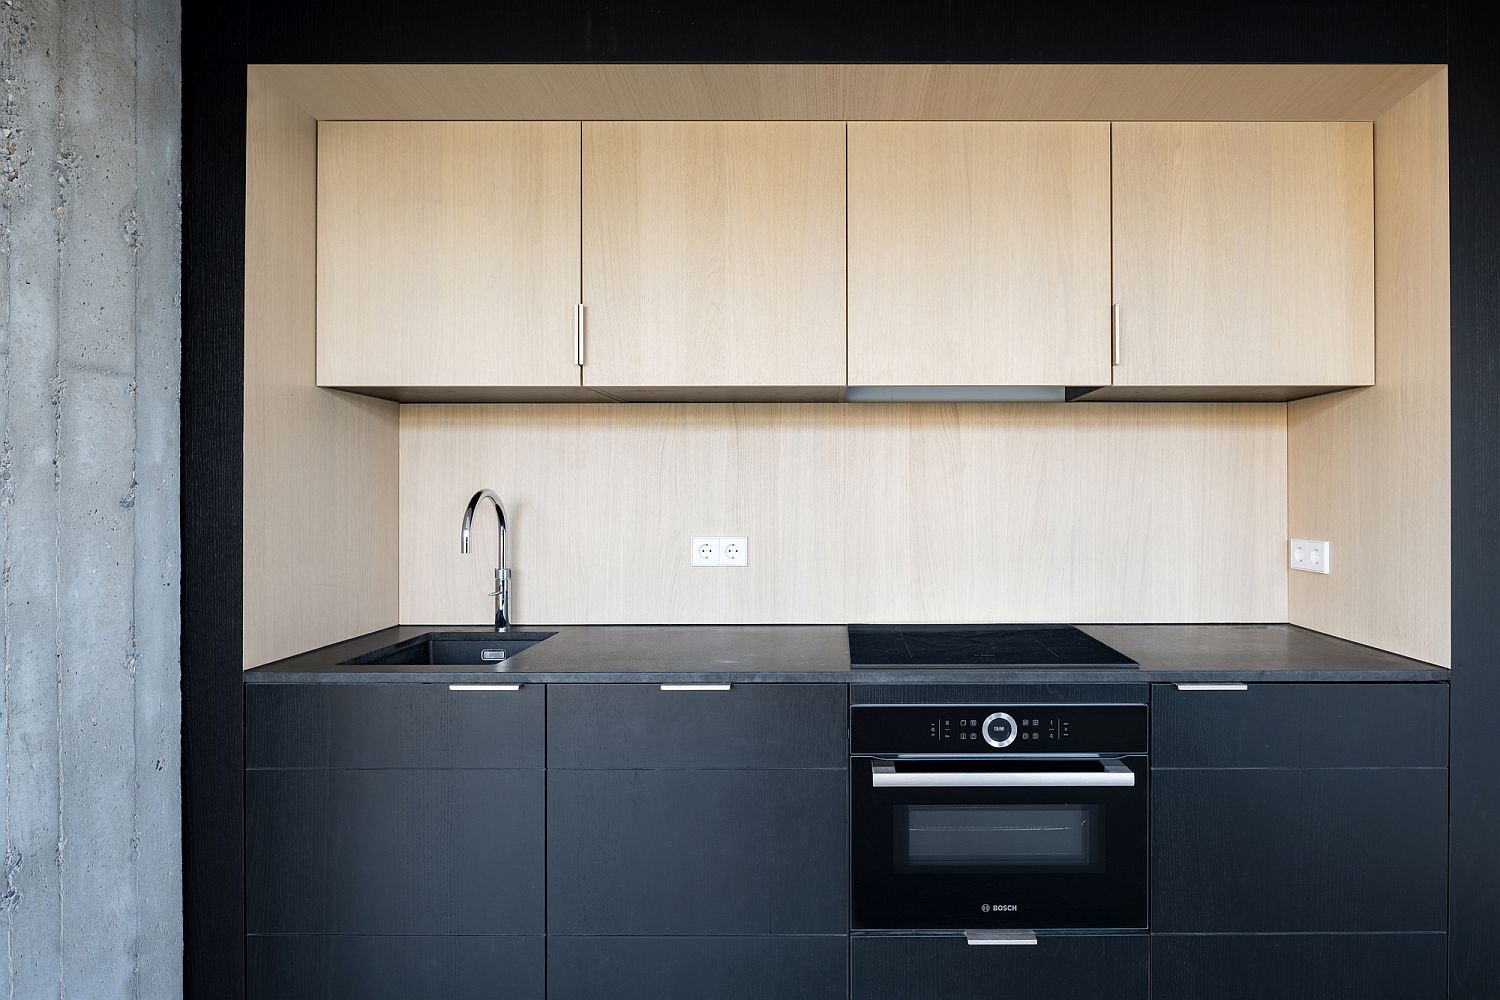 Wood-and-black-kitchen-idea